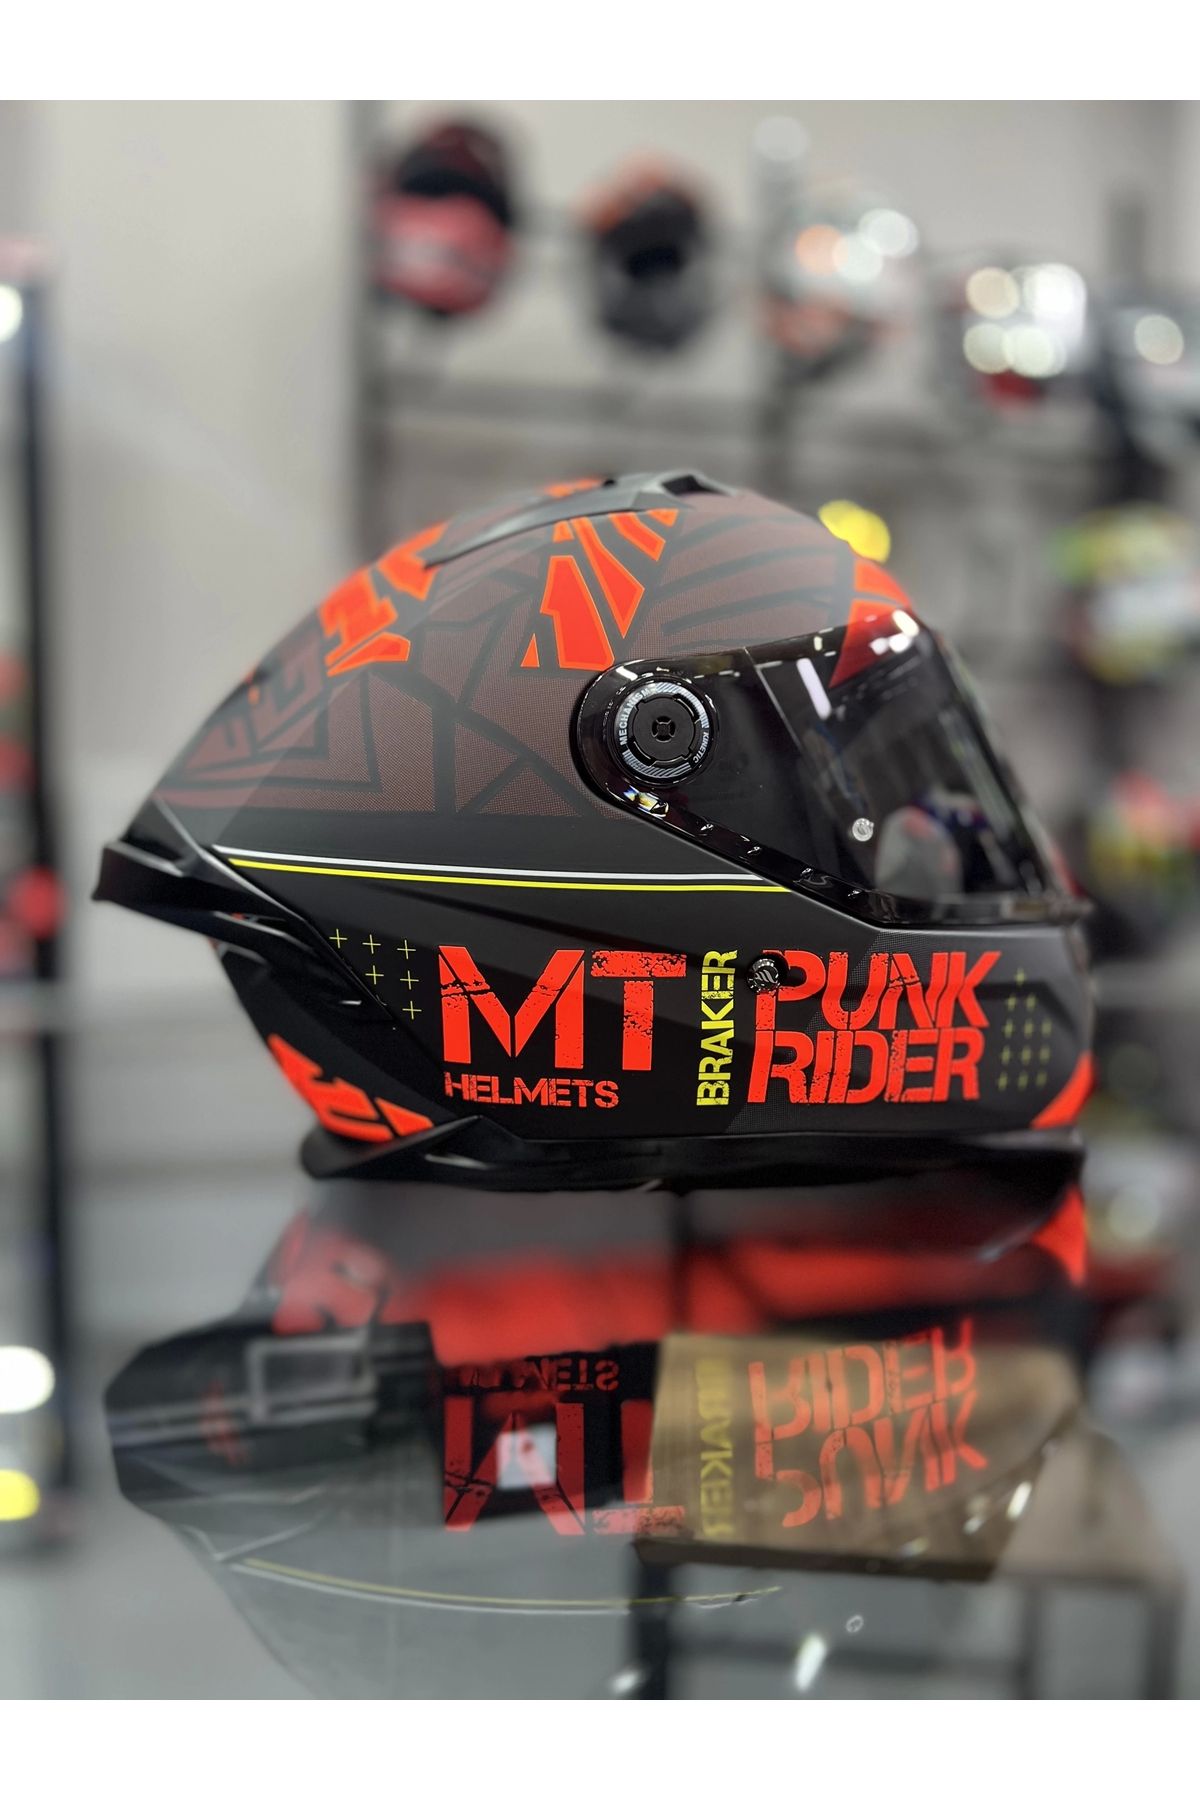 MT Helmets Kask MT Braker Sv Punk Rider B5 Mat Kırmızı Şeffaf Vizörlü